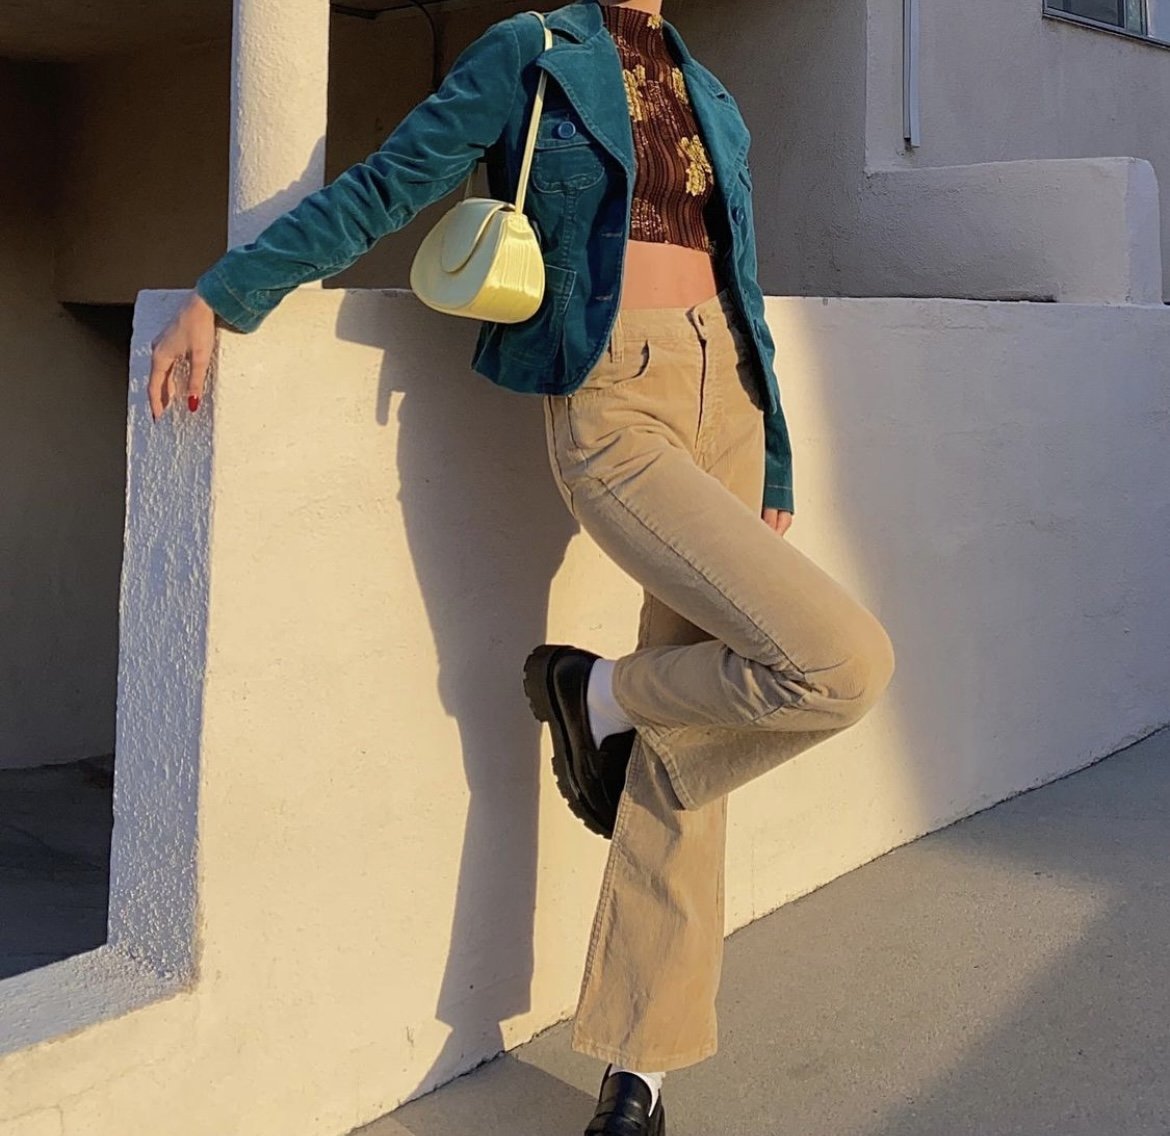 Emma Chamberlain's Style  Fashion inspo outfits, Emma chamberlain outfits,  Fashion outfits